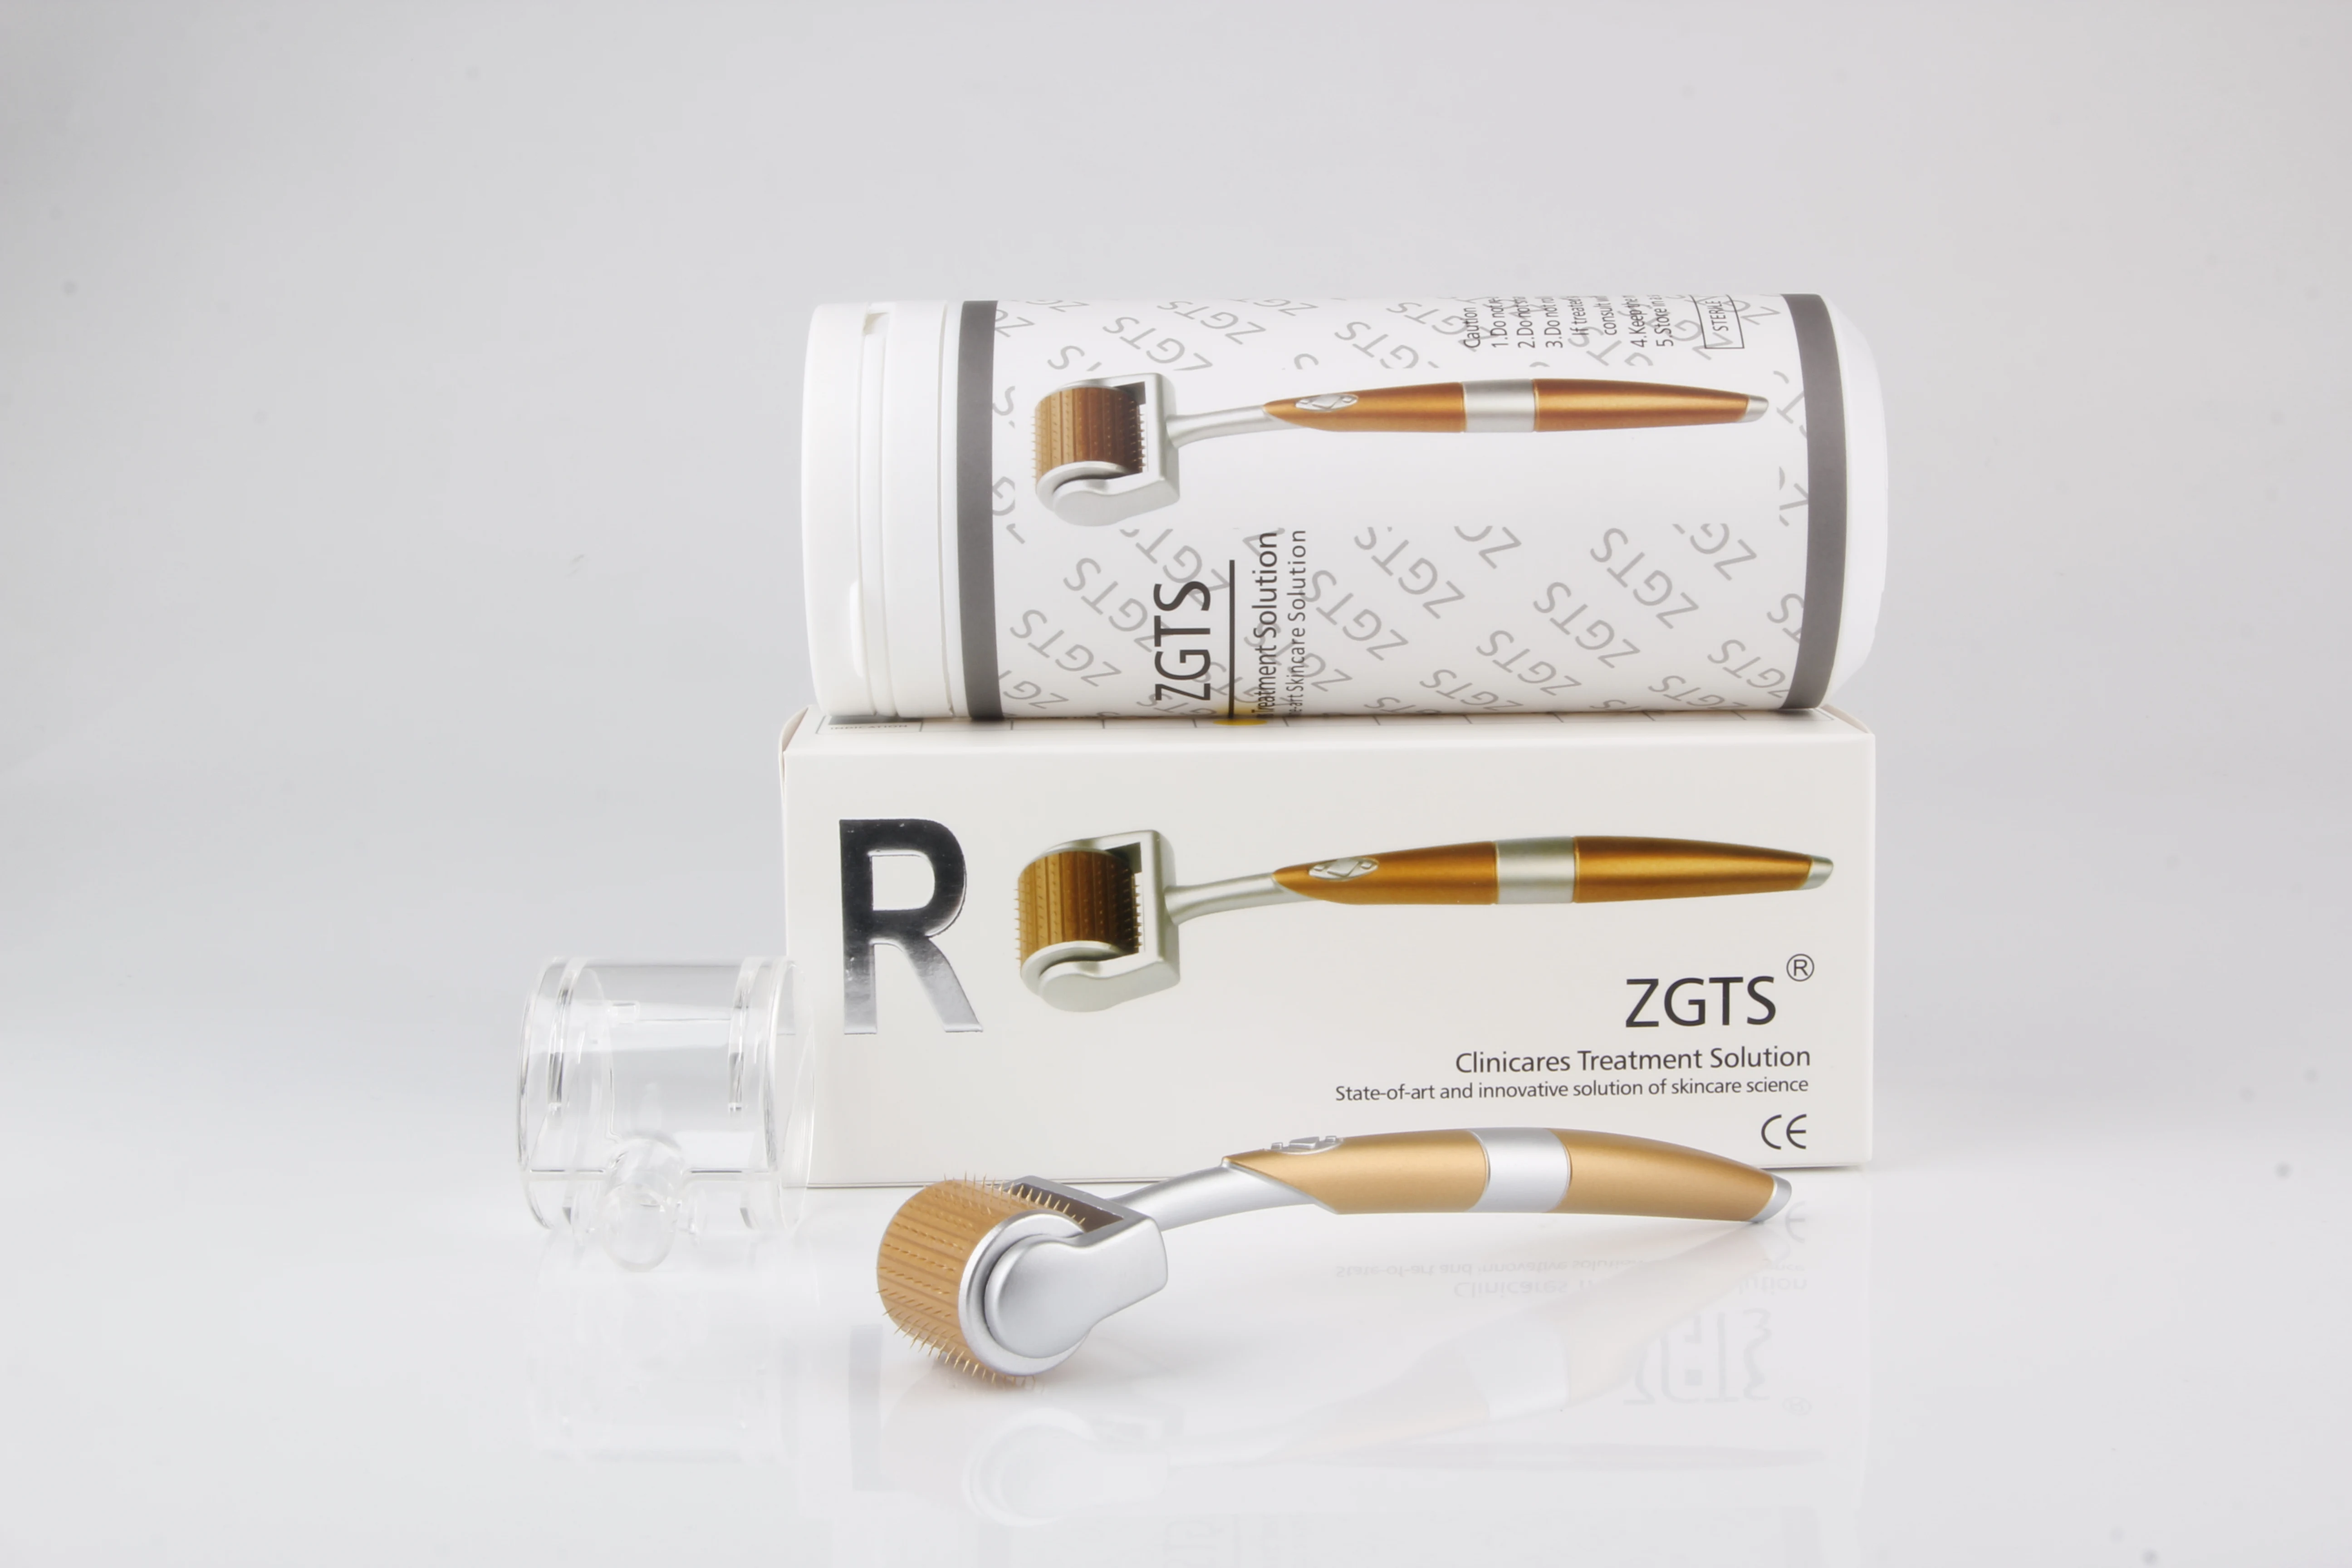 ZGTS 192 needles non-cracking derma roller